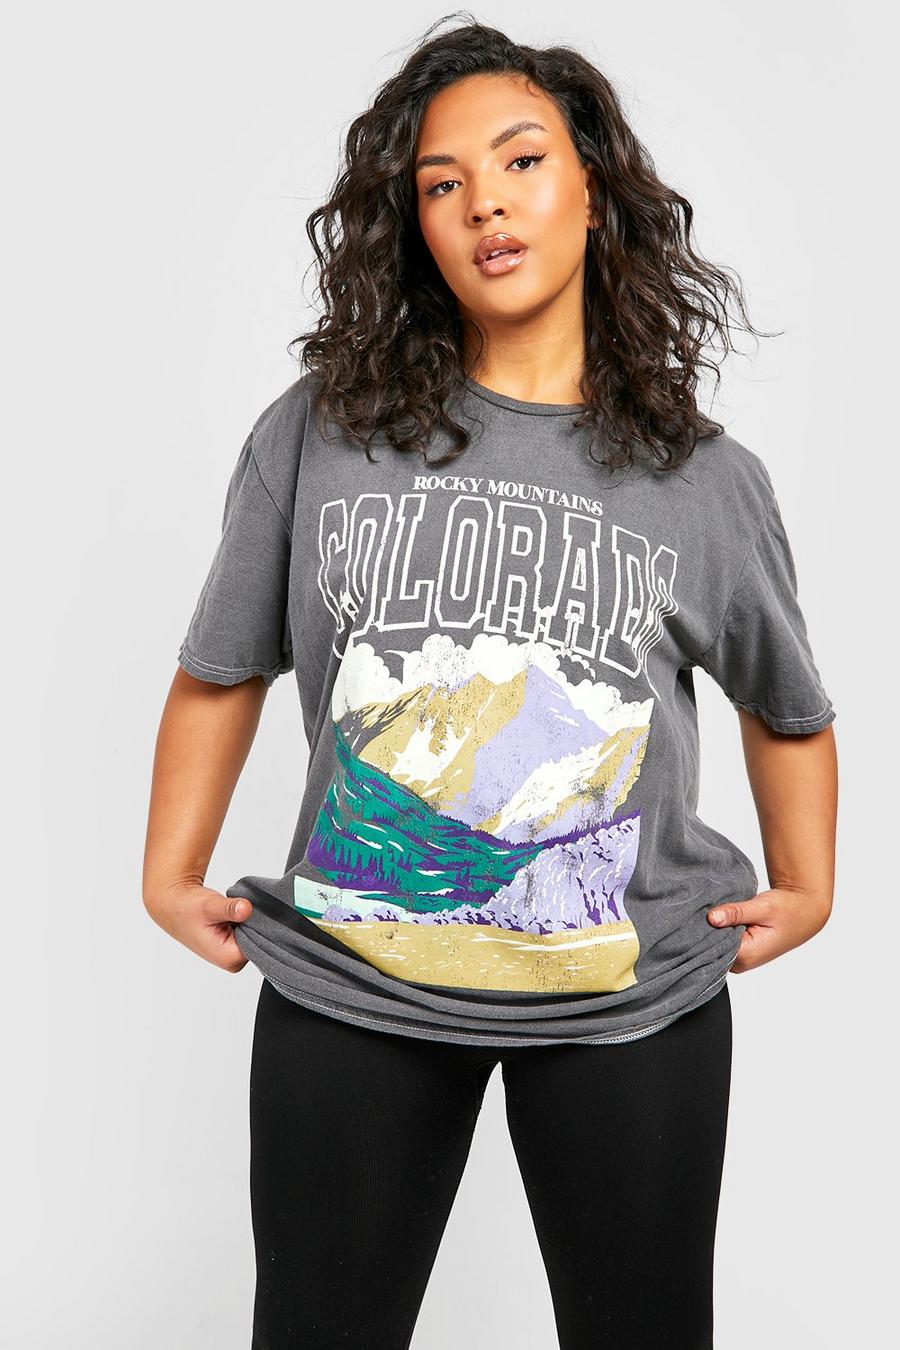 T-shirt Plus Size slavata in Colorado, Charcoal